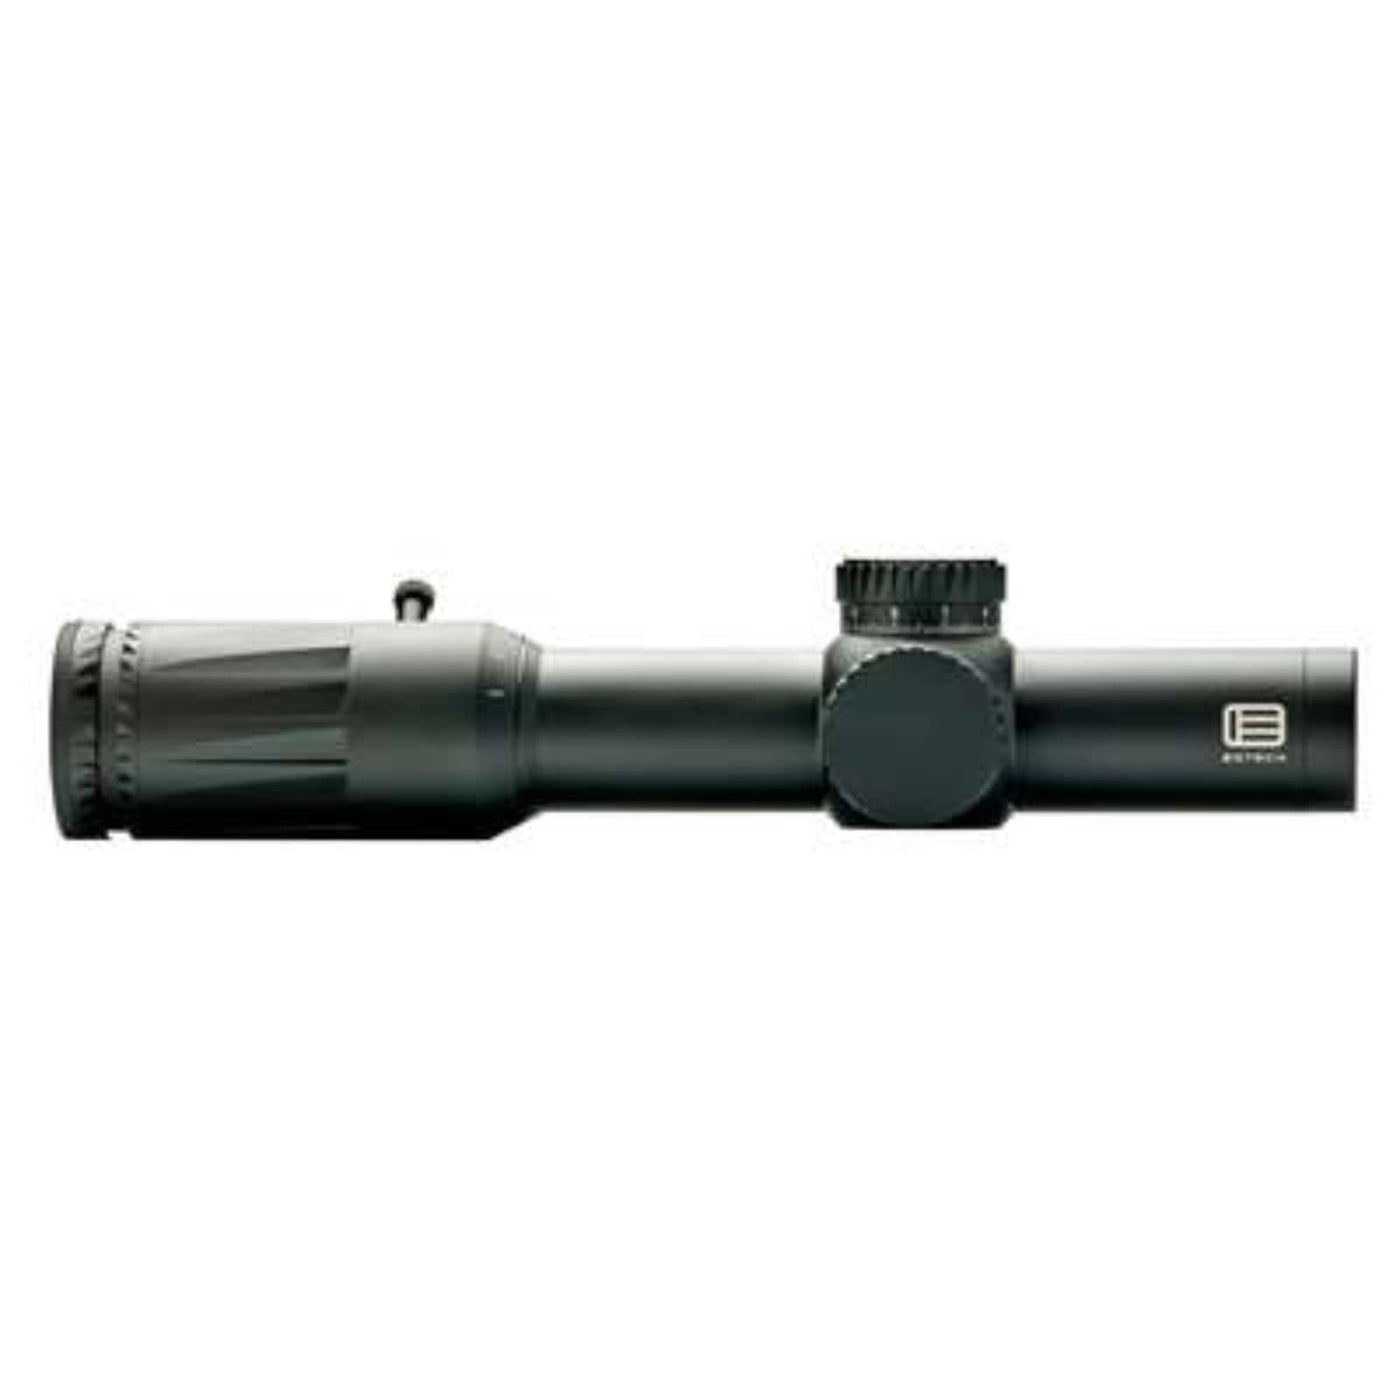 EOTECH EOTech Vudu 1-6x24 FFP Riflescope SR1 Green Reticle MRAD Optics And Sights